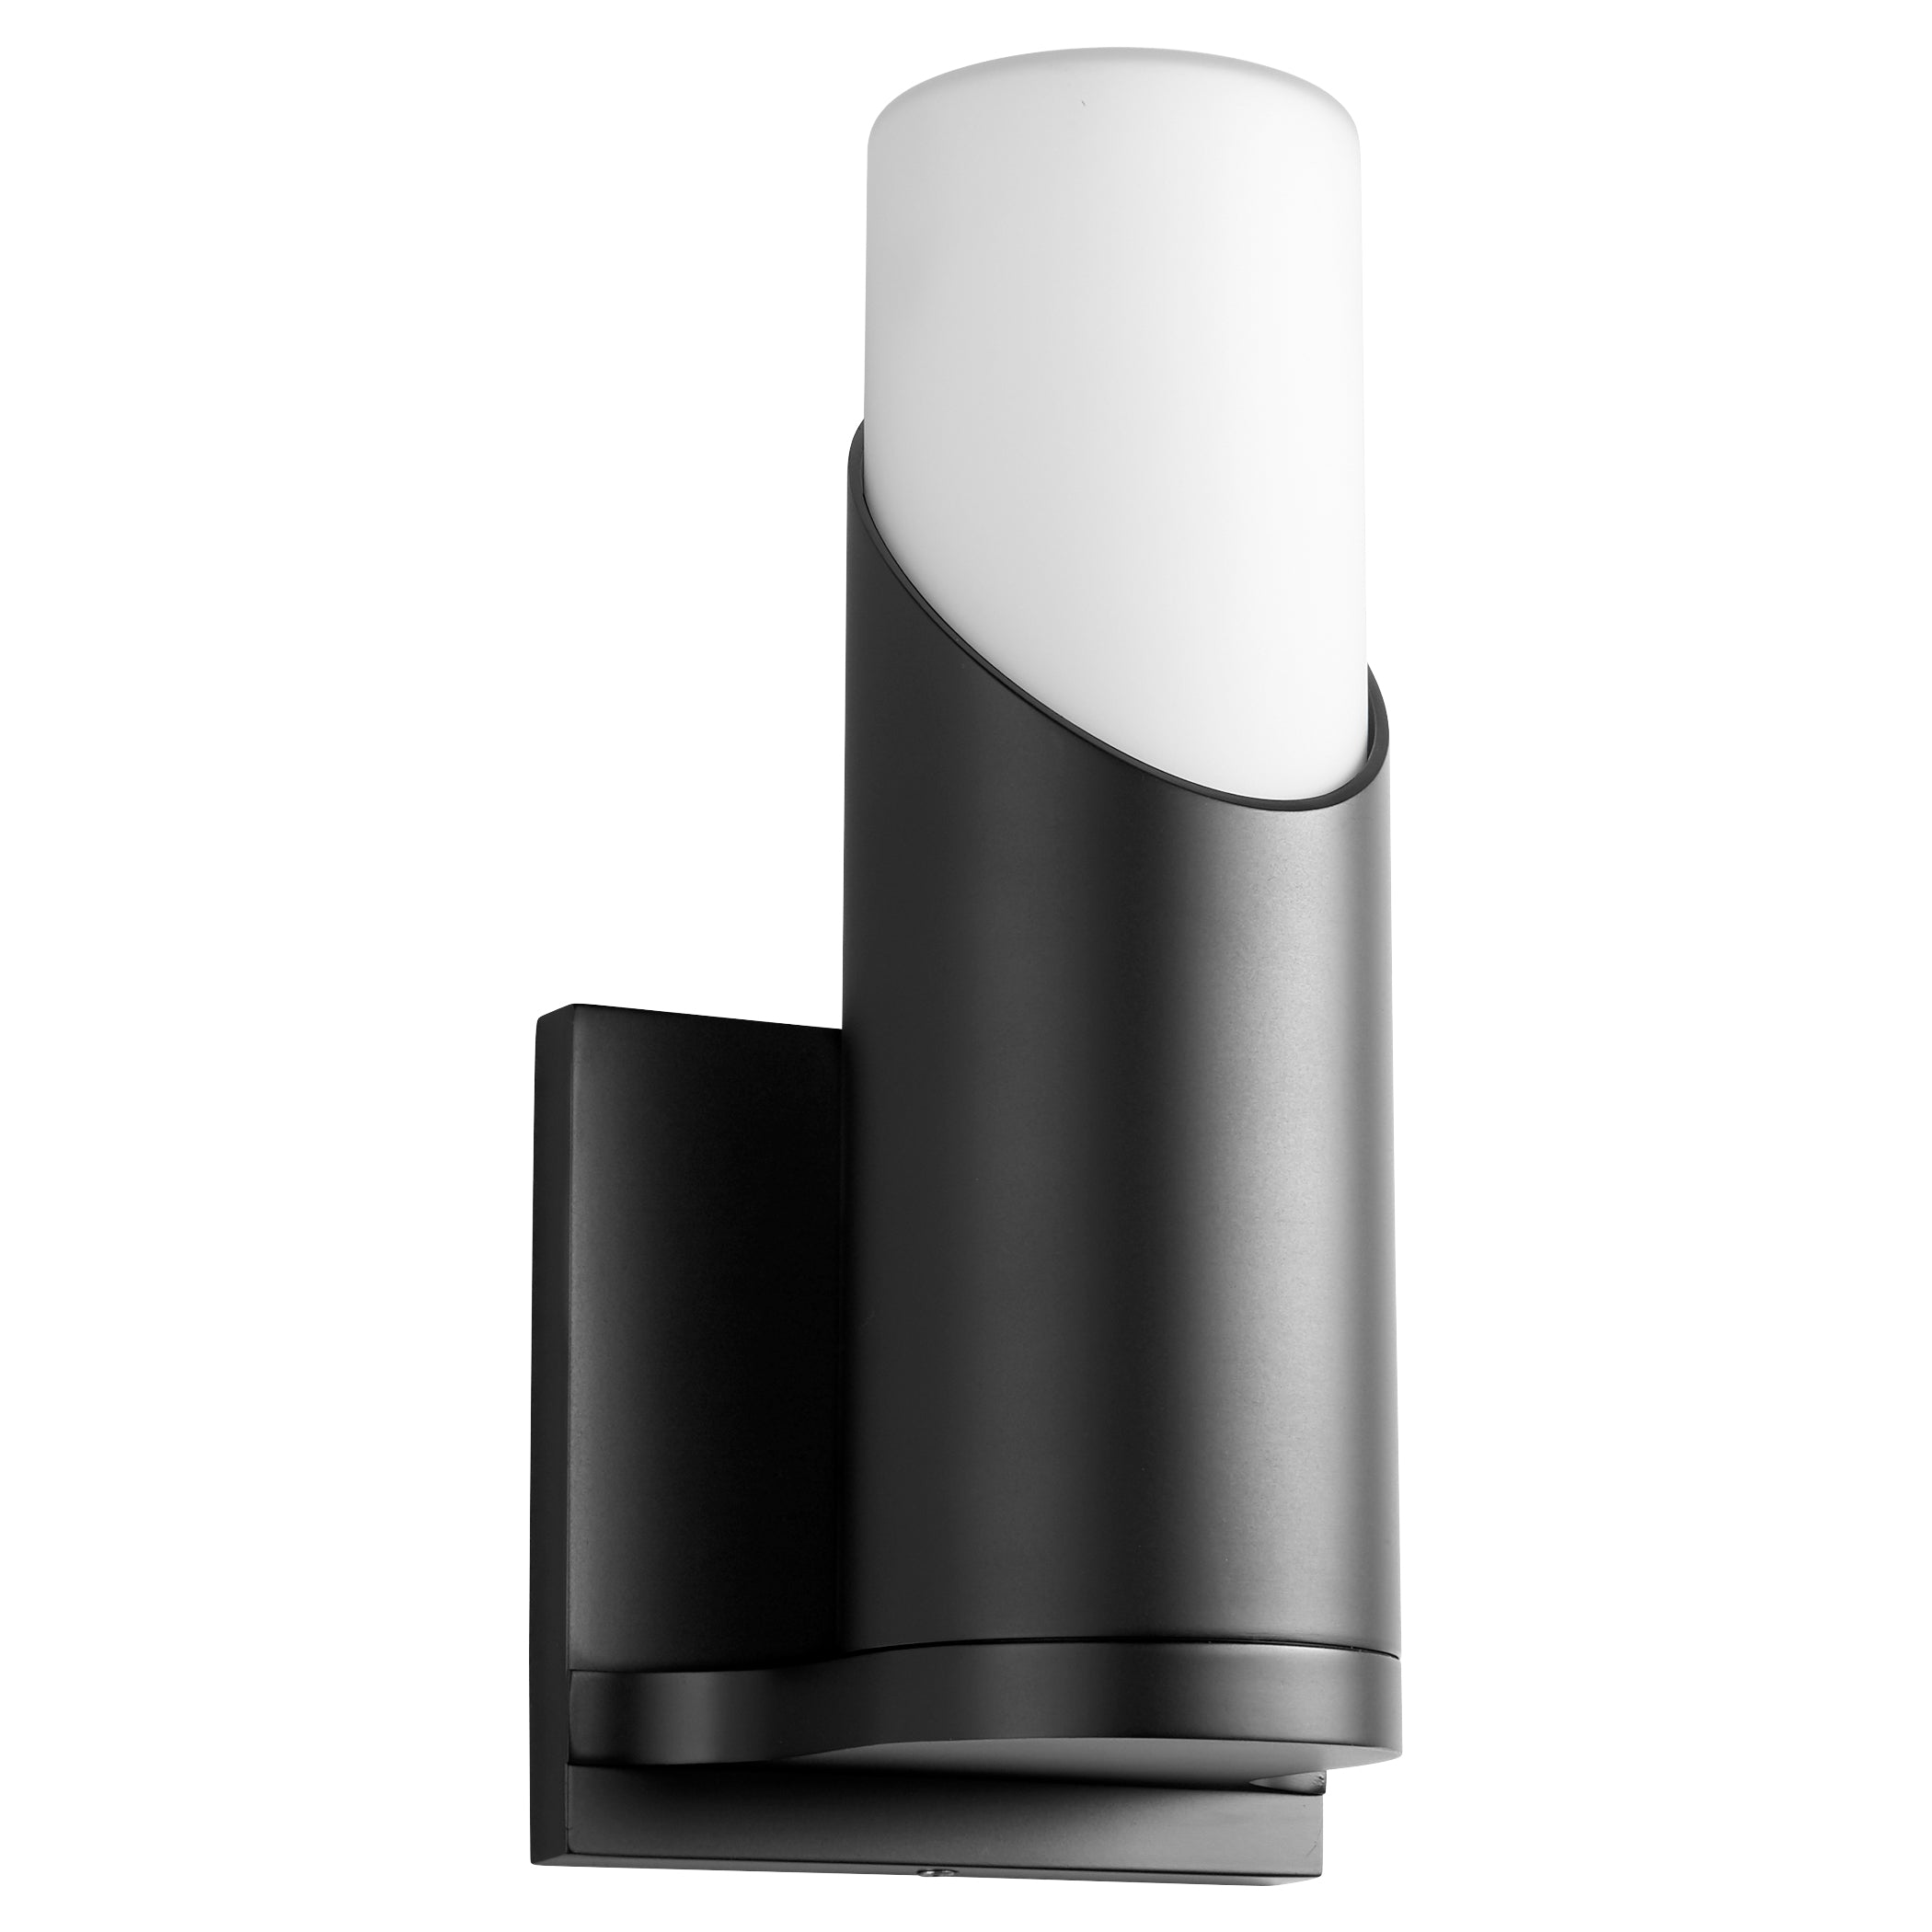 Oxygen Ellipse 3-567-115 Glass LED Wall Sconce Light - Black, White Opal Glass Diffuser